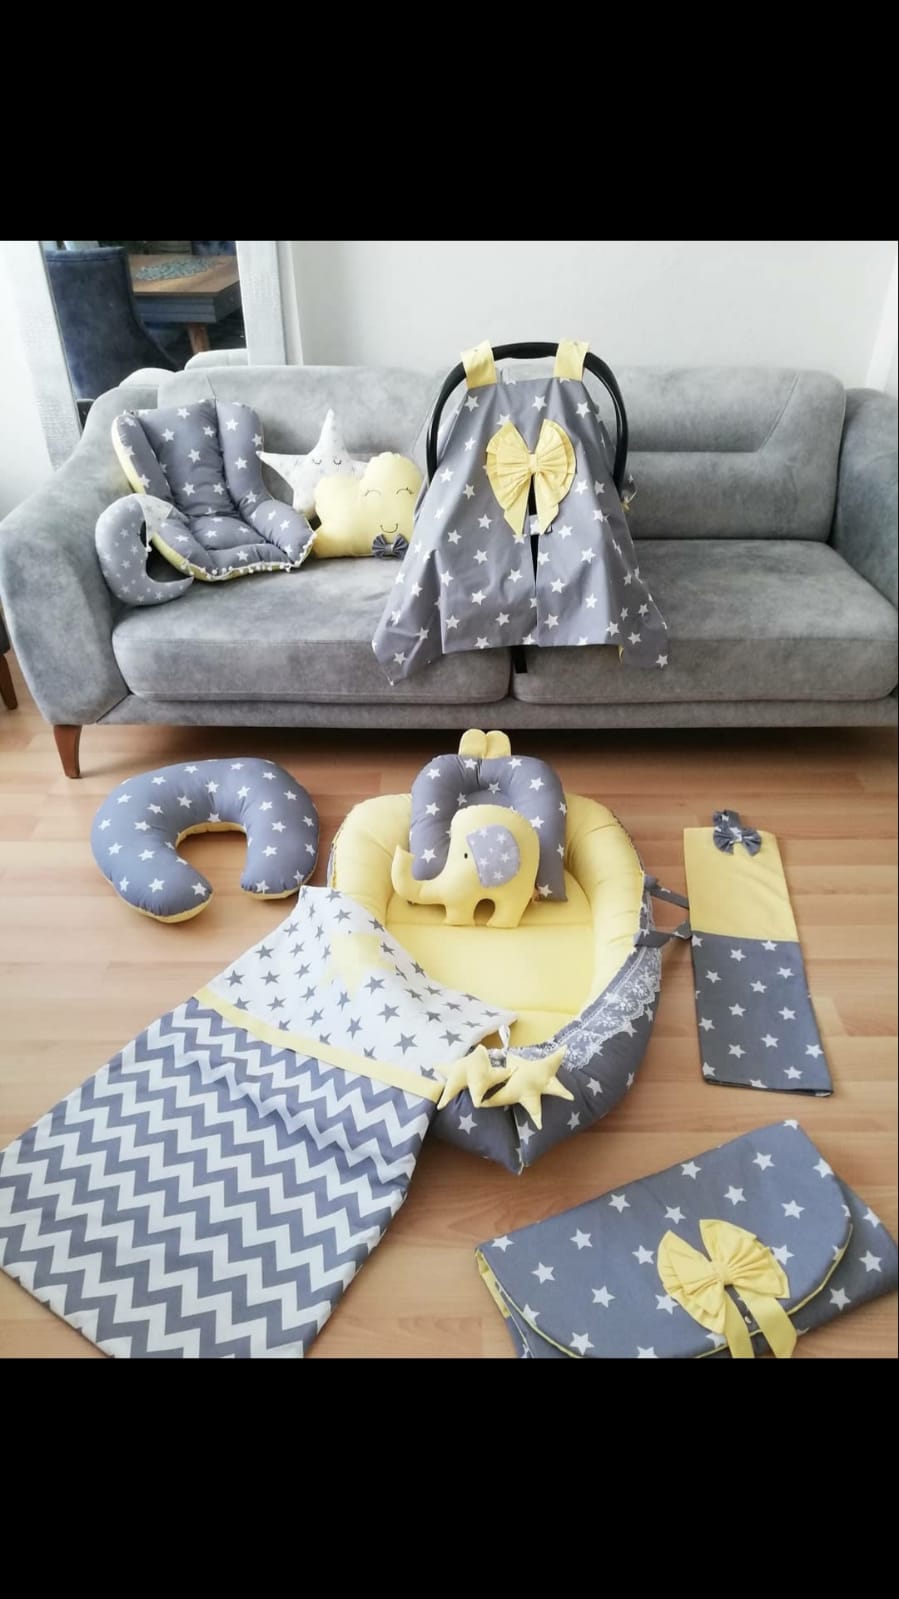 Sleeping and gaming cushions Dark Grey-Yellow